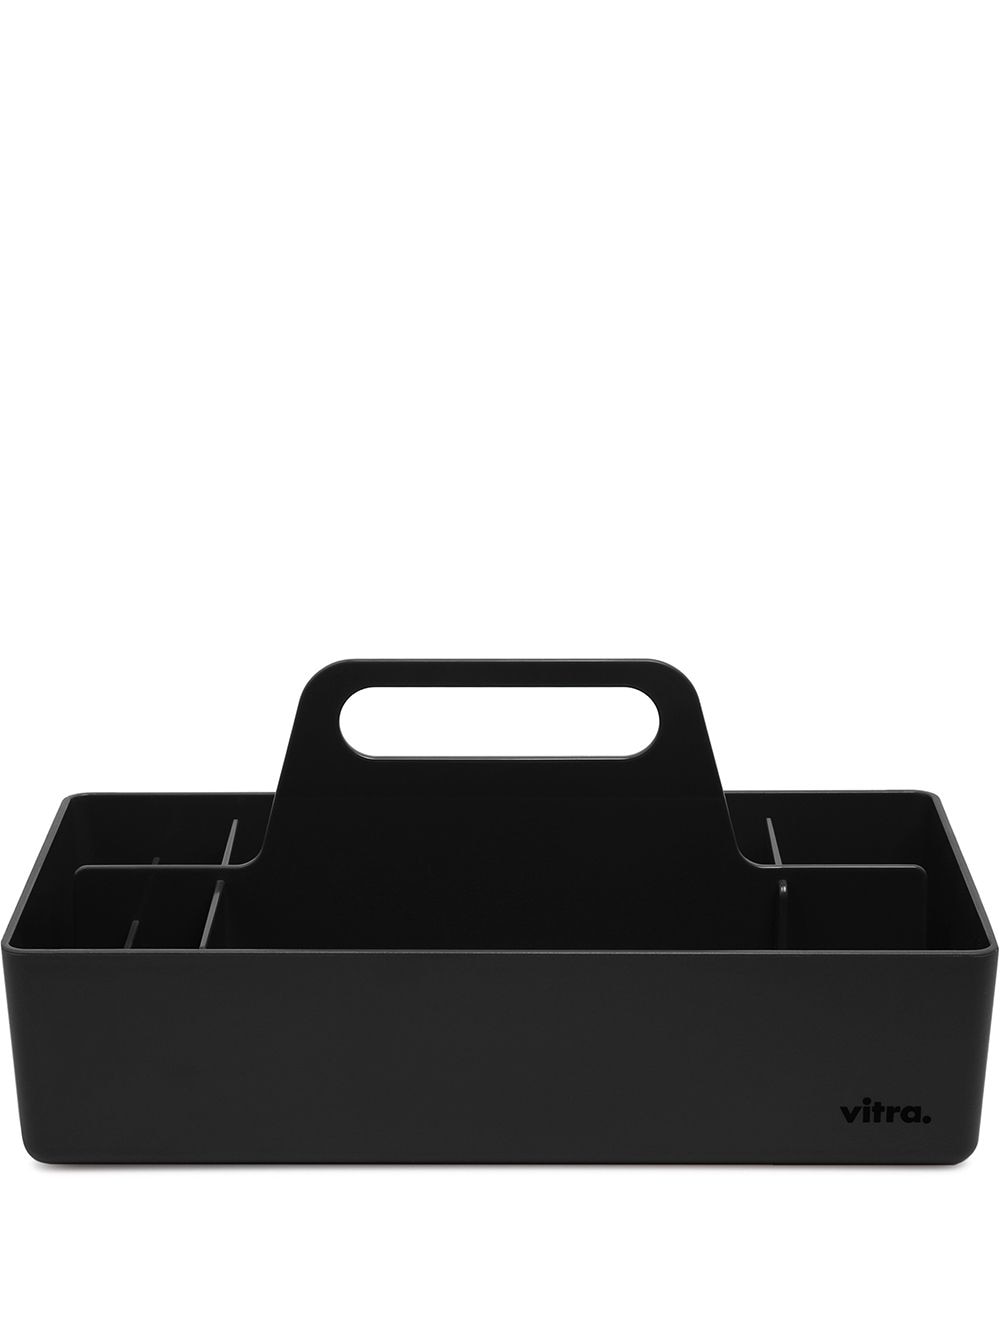 Vitra Basic Tool Box In Black